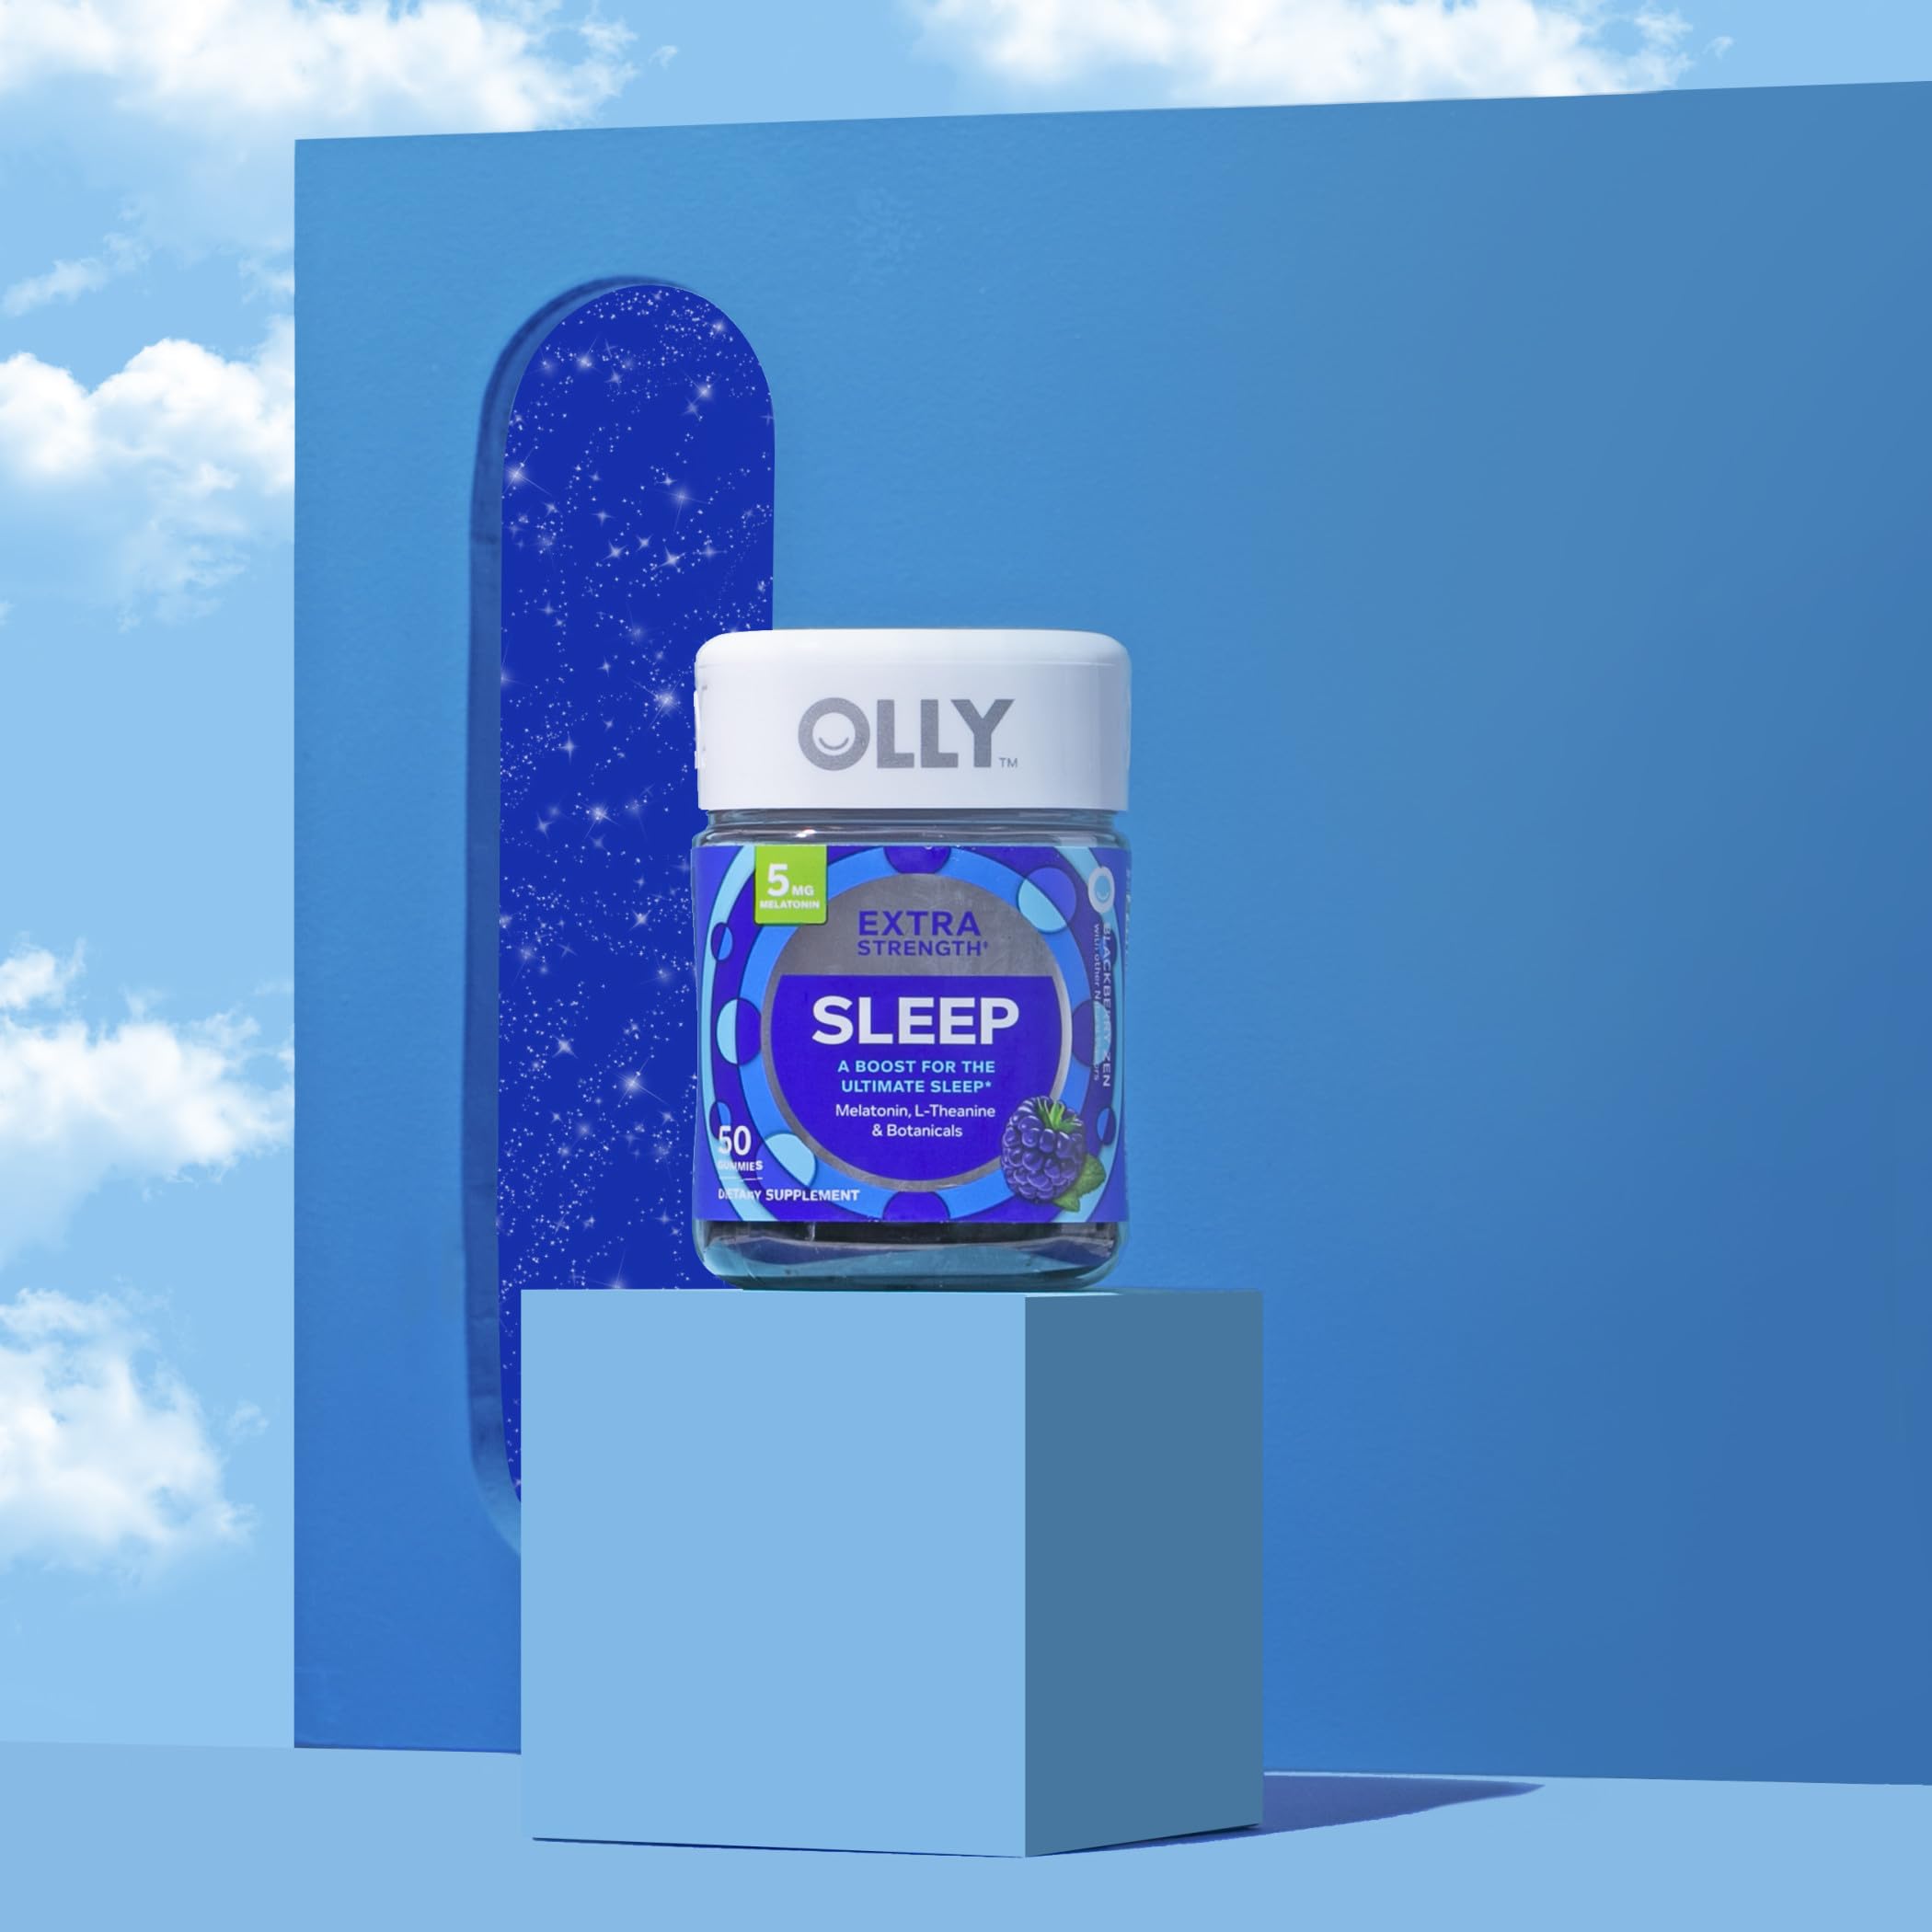 OLLY Extra Strength Sleep Gummy, Occasional Sleep Support, 5 mg Melatonin, L-Theanine, Chamomile, Lemon Balm, Sleep Aid, BlackBerry - 50 Count